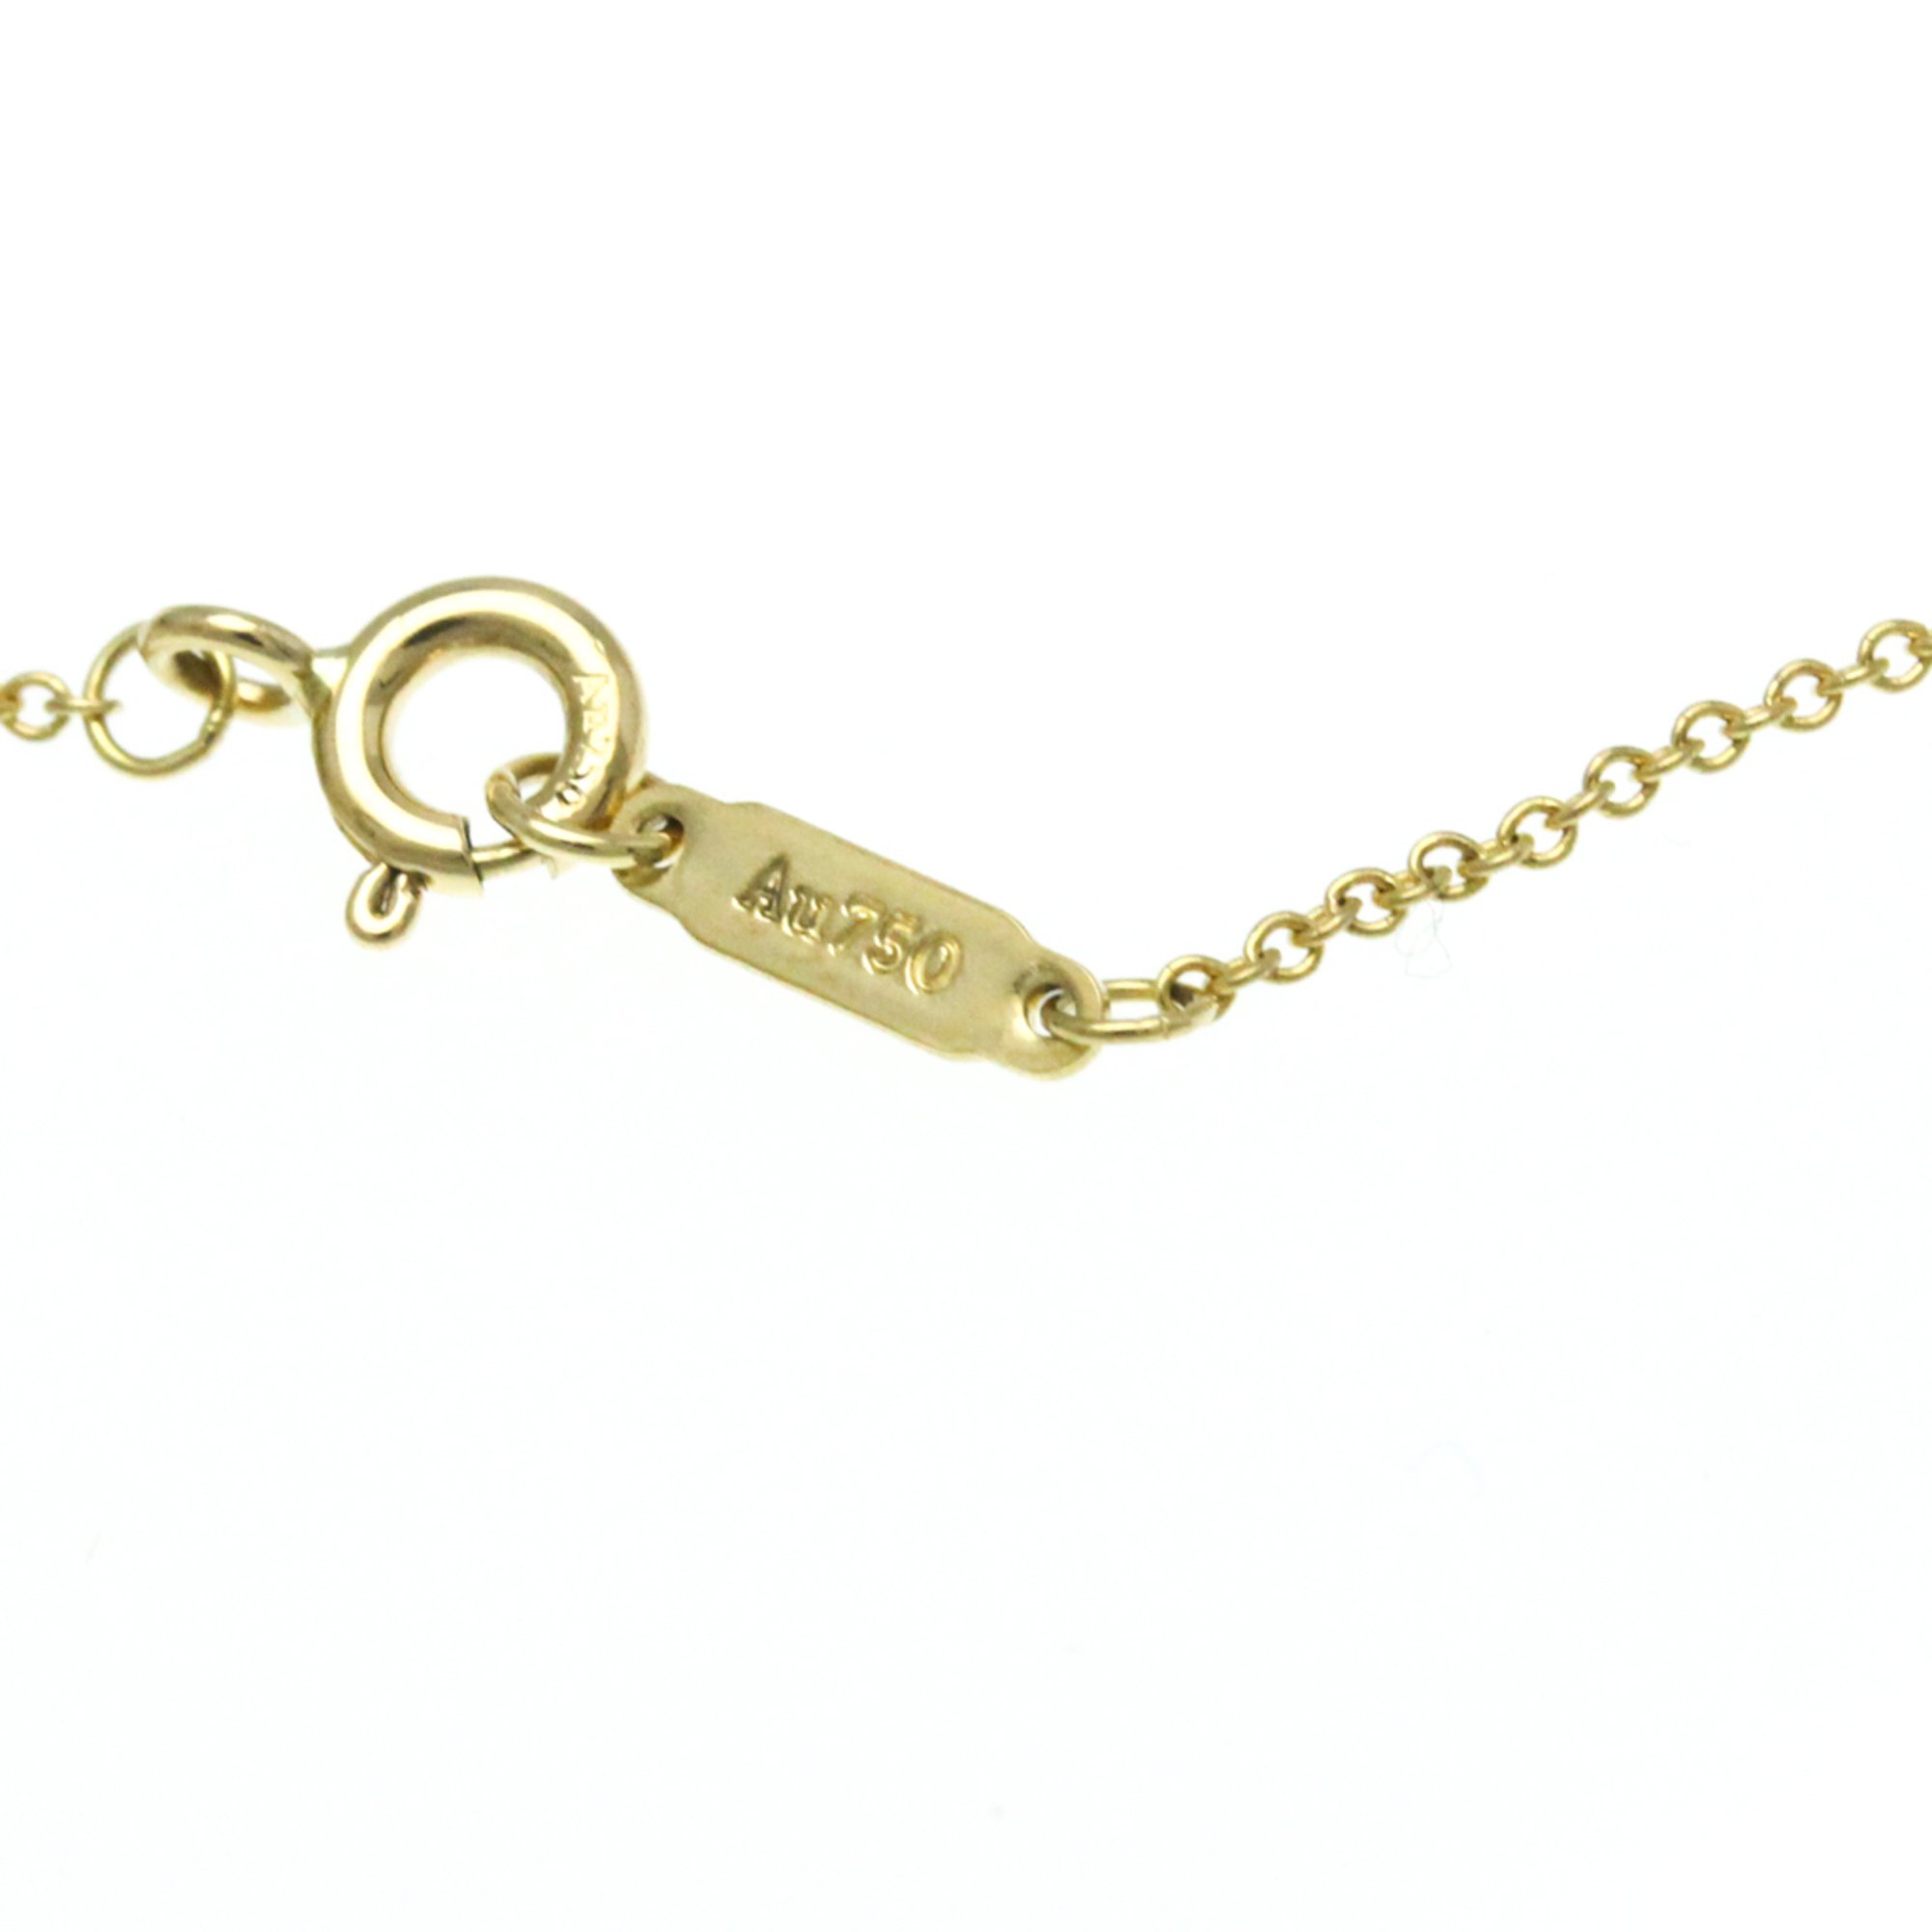 Tiffany Modern Key Necklace Yellow Gold (18K) Diamond Men,Women Fashion Pendant Necklace (Gold)